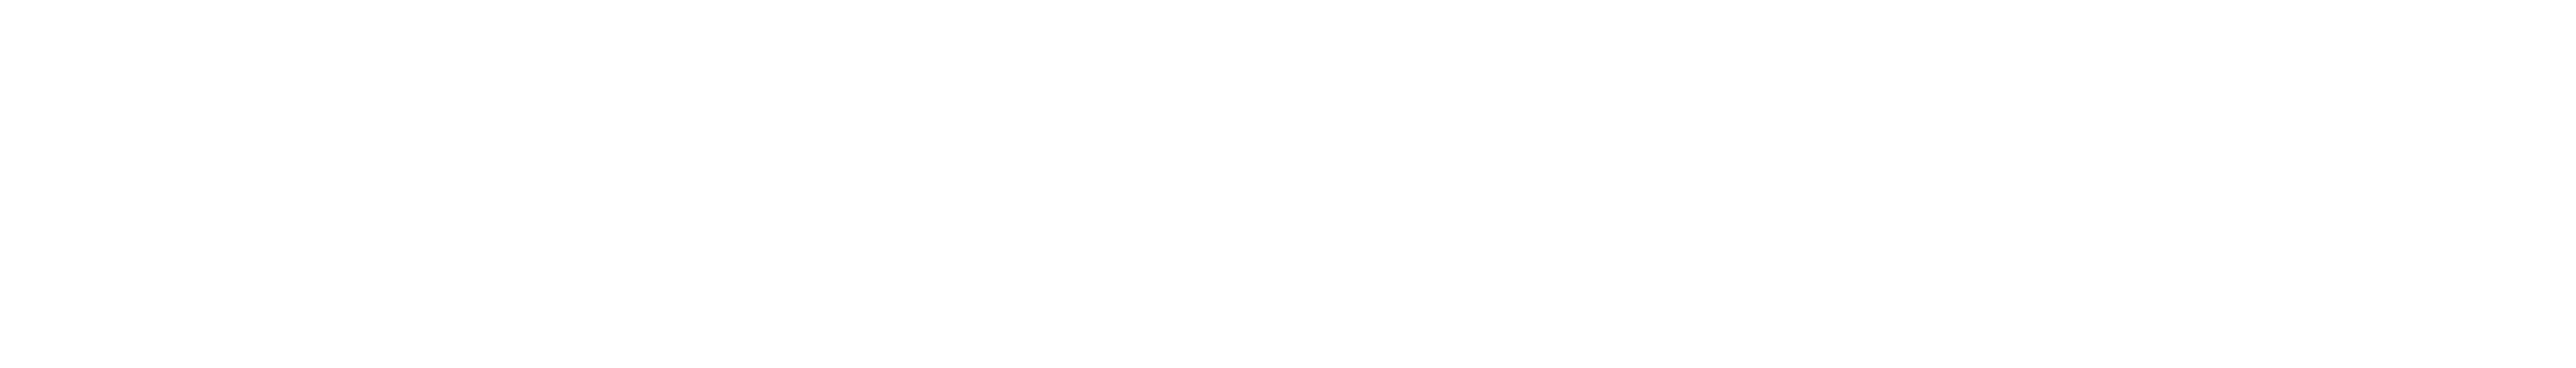 Trade Show Booth Builders - Orlando Dallas Chicago Booth Construction USA